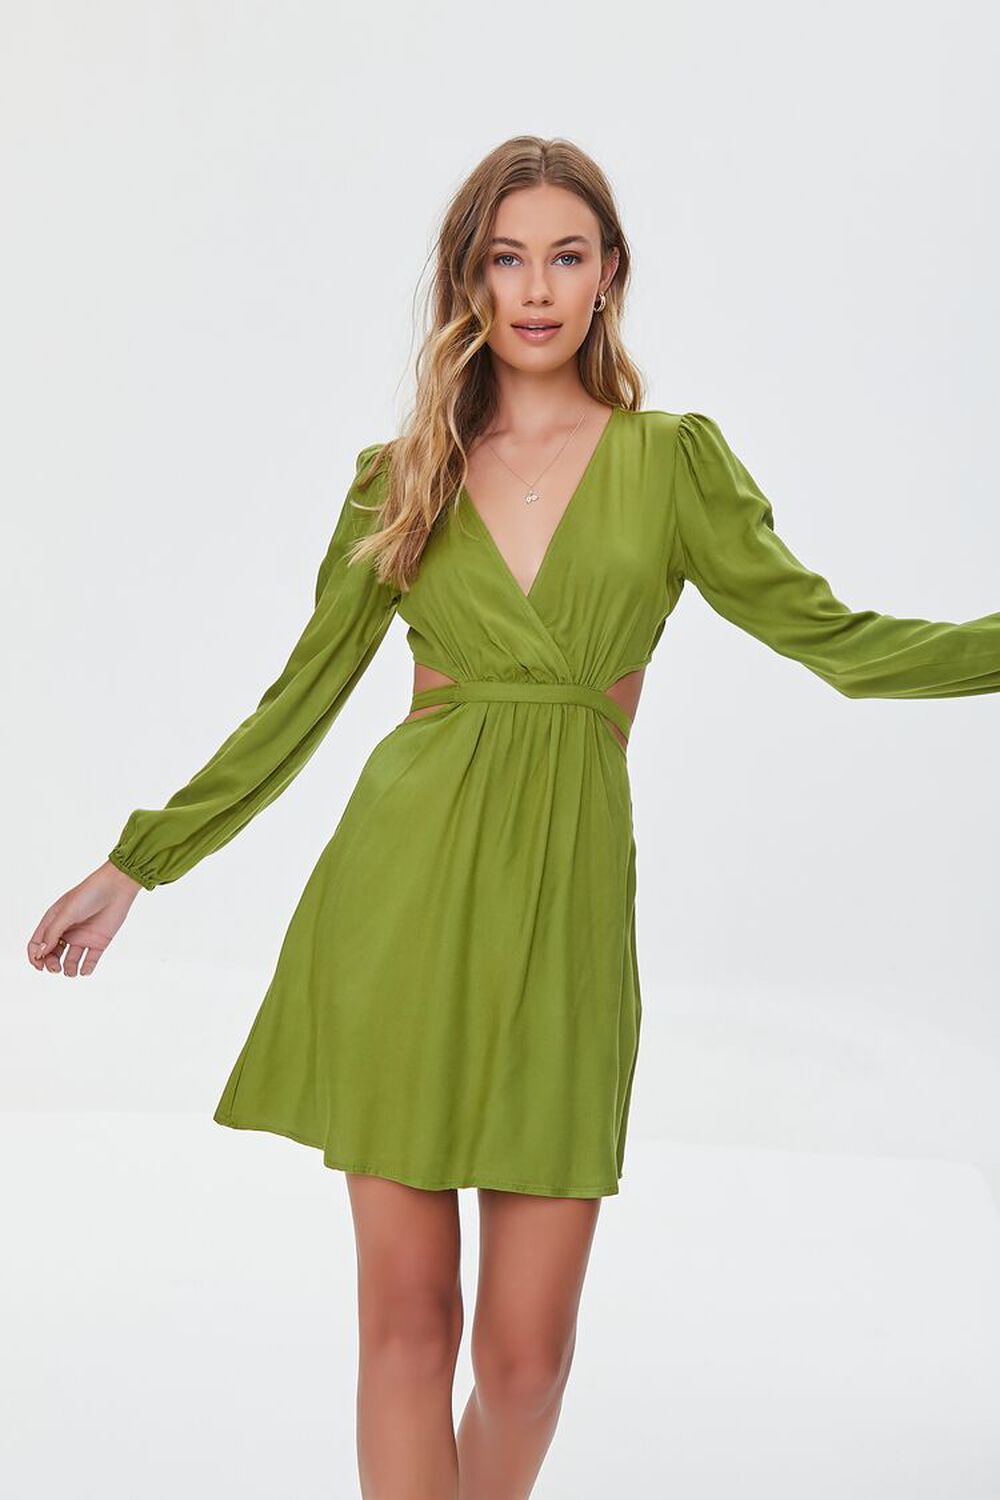 GREEN Cutout Plunging Mini Dress, image 1